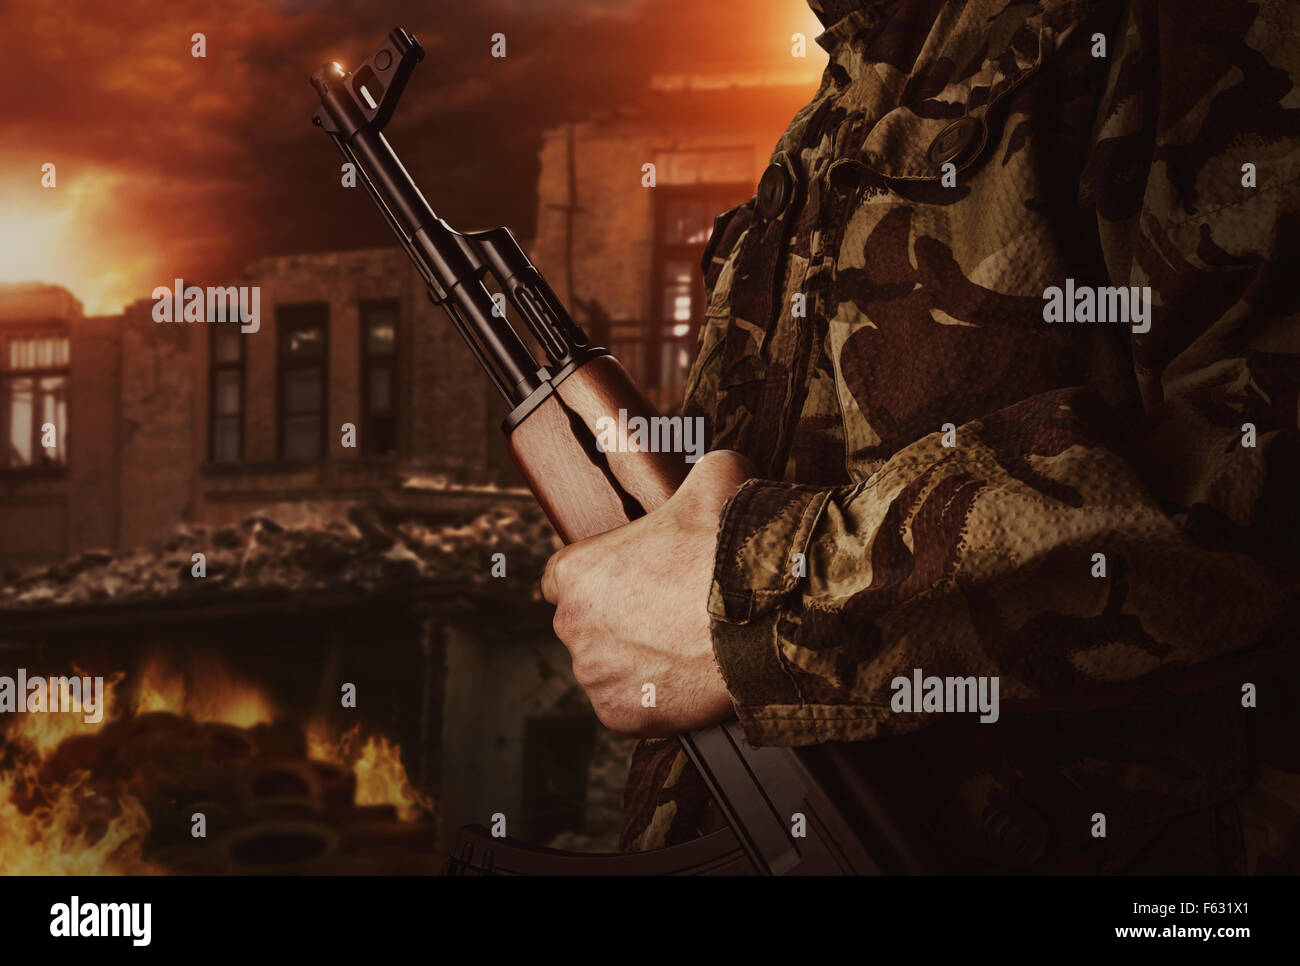 Soldier is holding gun on apocalyptic dark background Stock Photo